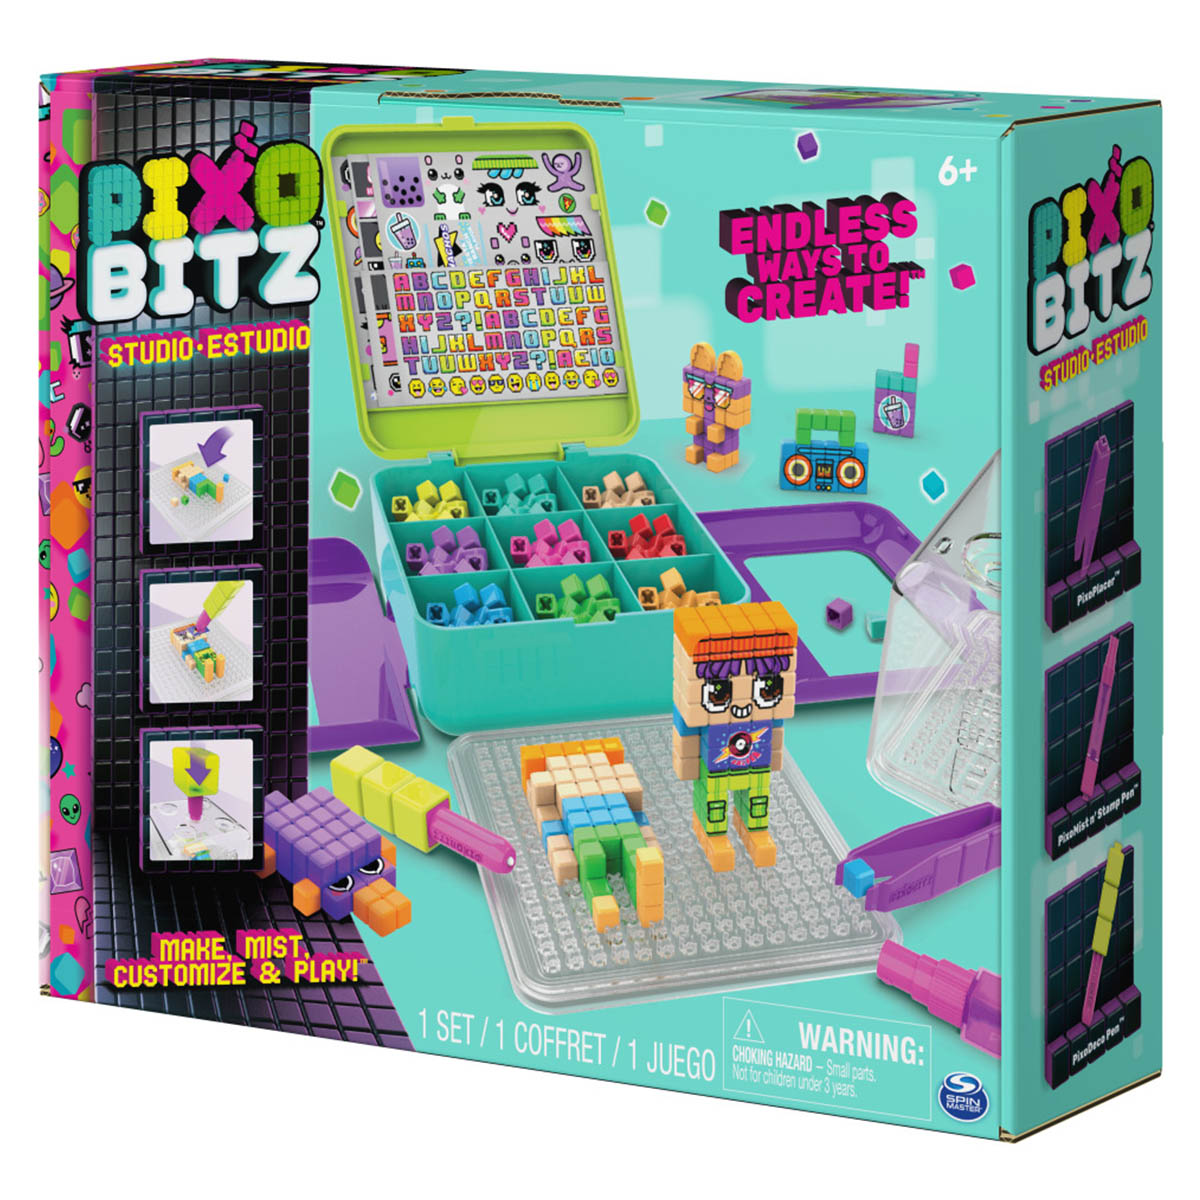 Pixobitz Studio - Kiddy Zone